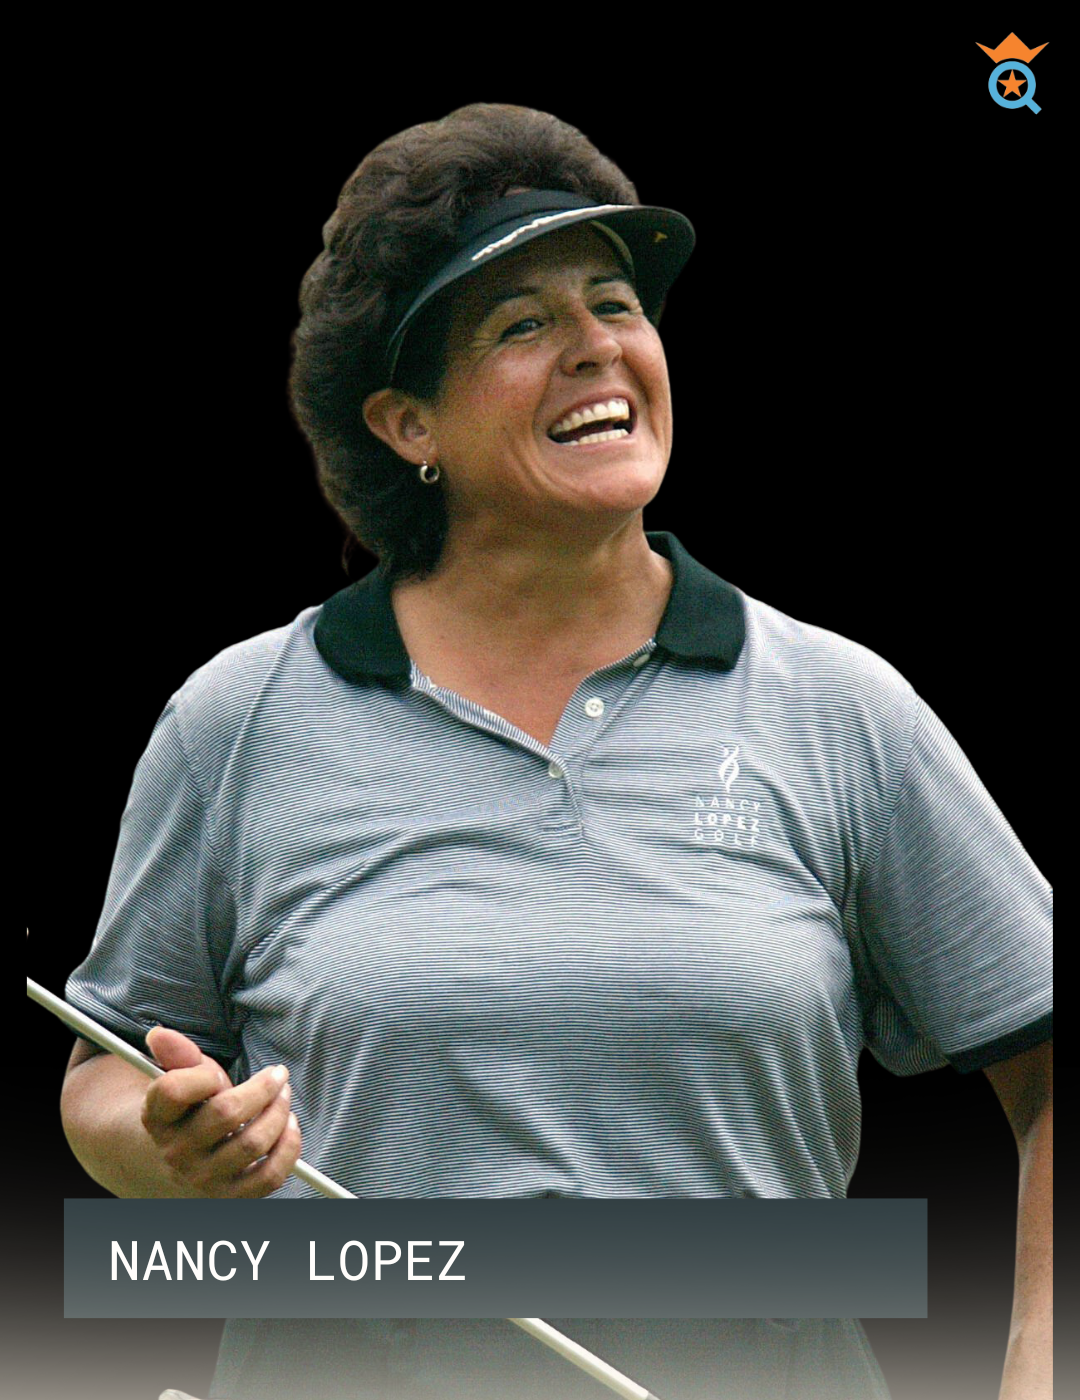 Best Golf Player, Nancy Lopez